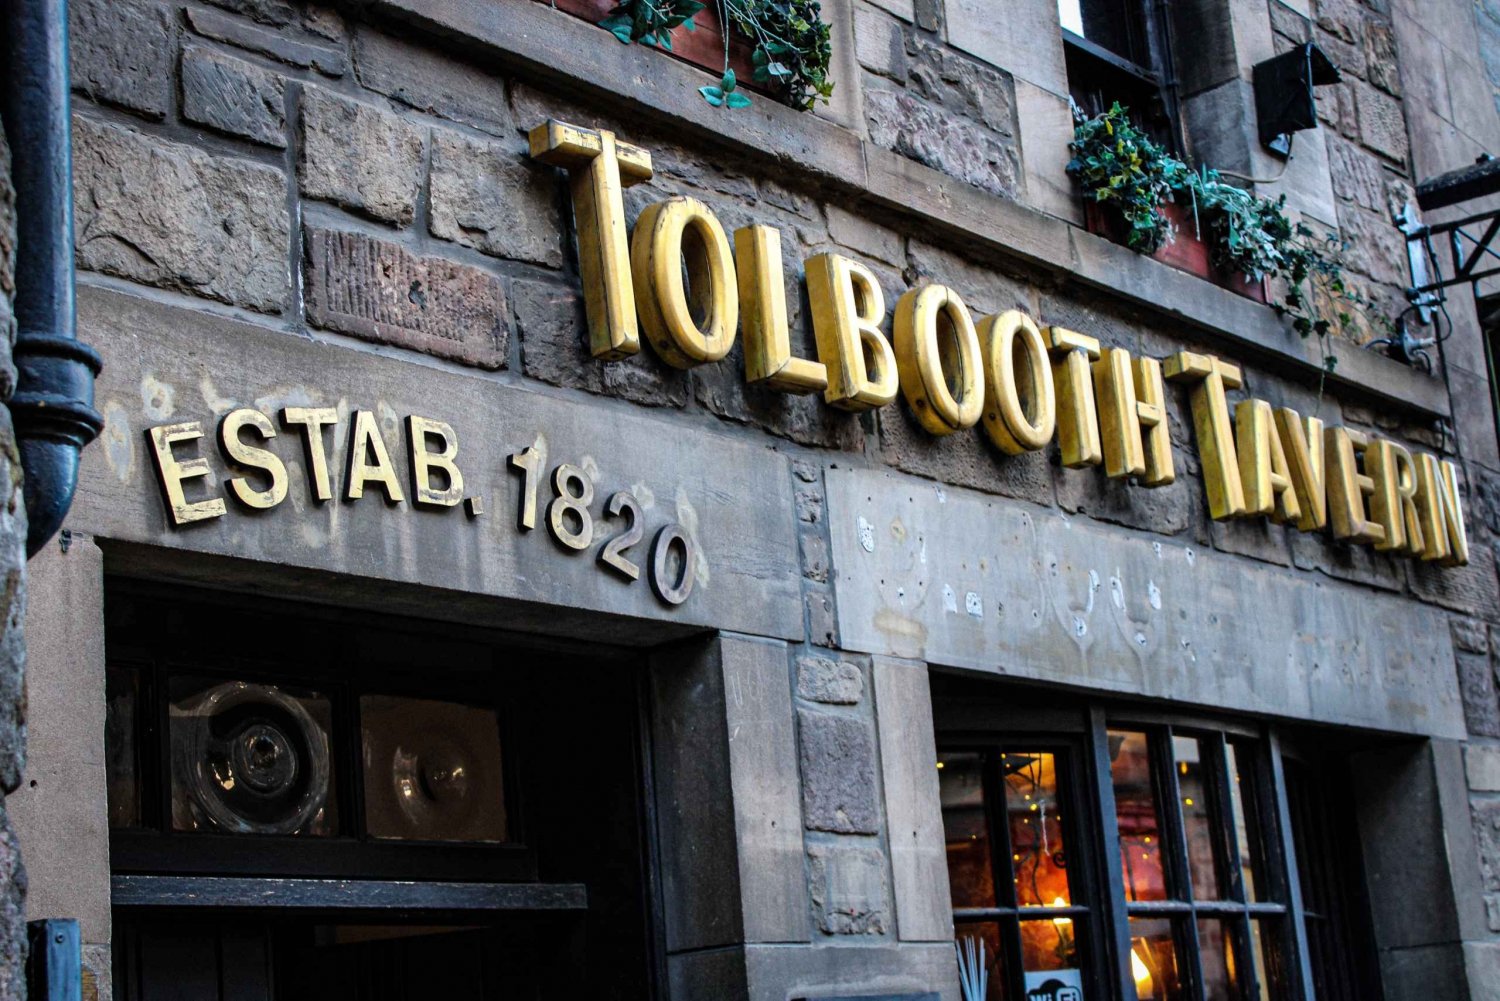 Edinburgh: Scottish Tasting Platter at The Tolbooth Tavern